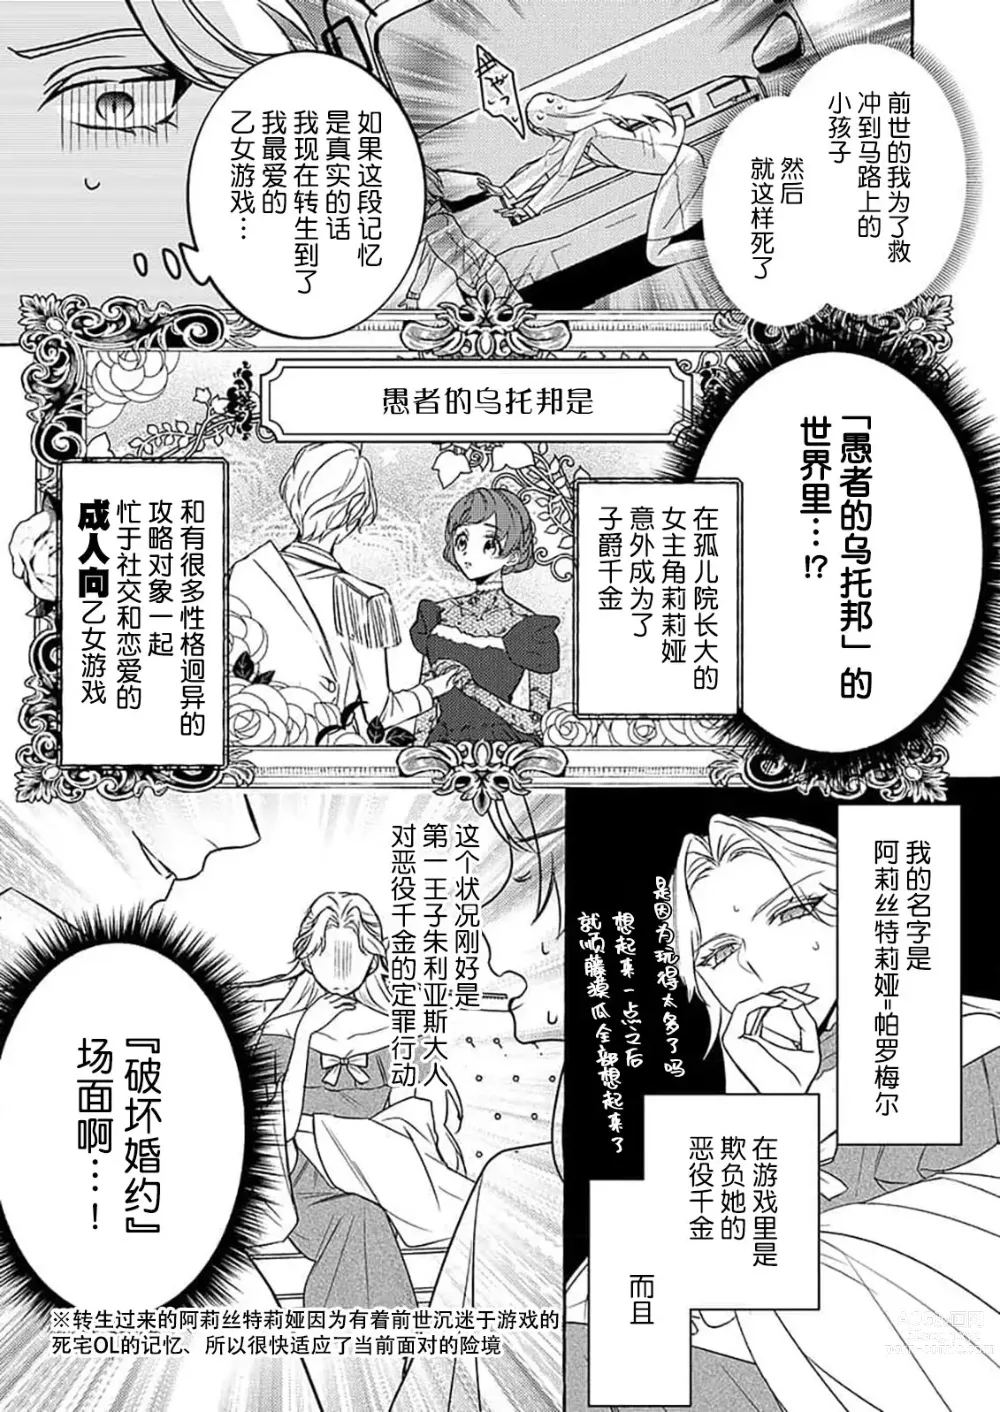 Page 5 of manga 这样的快感、是惩罚~第二次的婚约是和一直喜欢的初恋